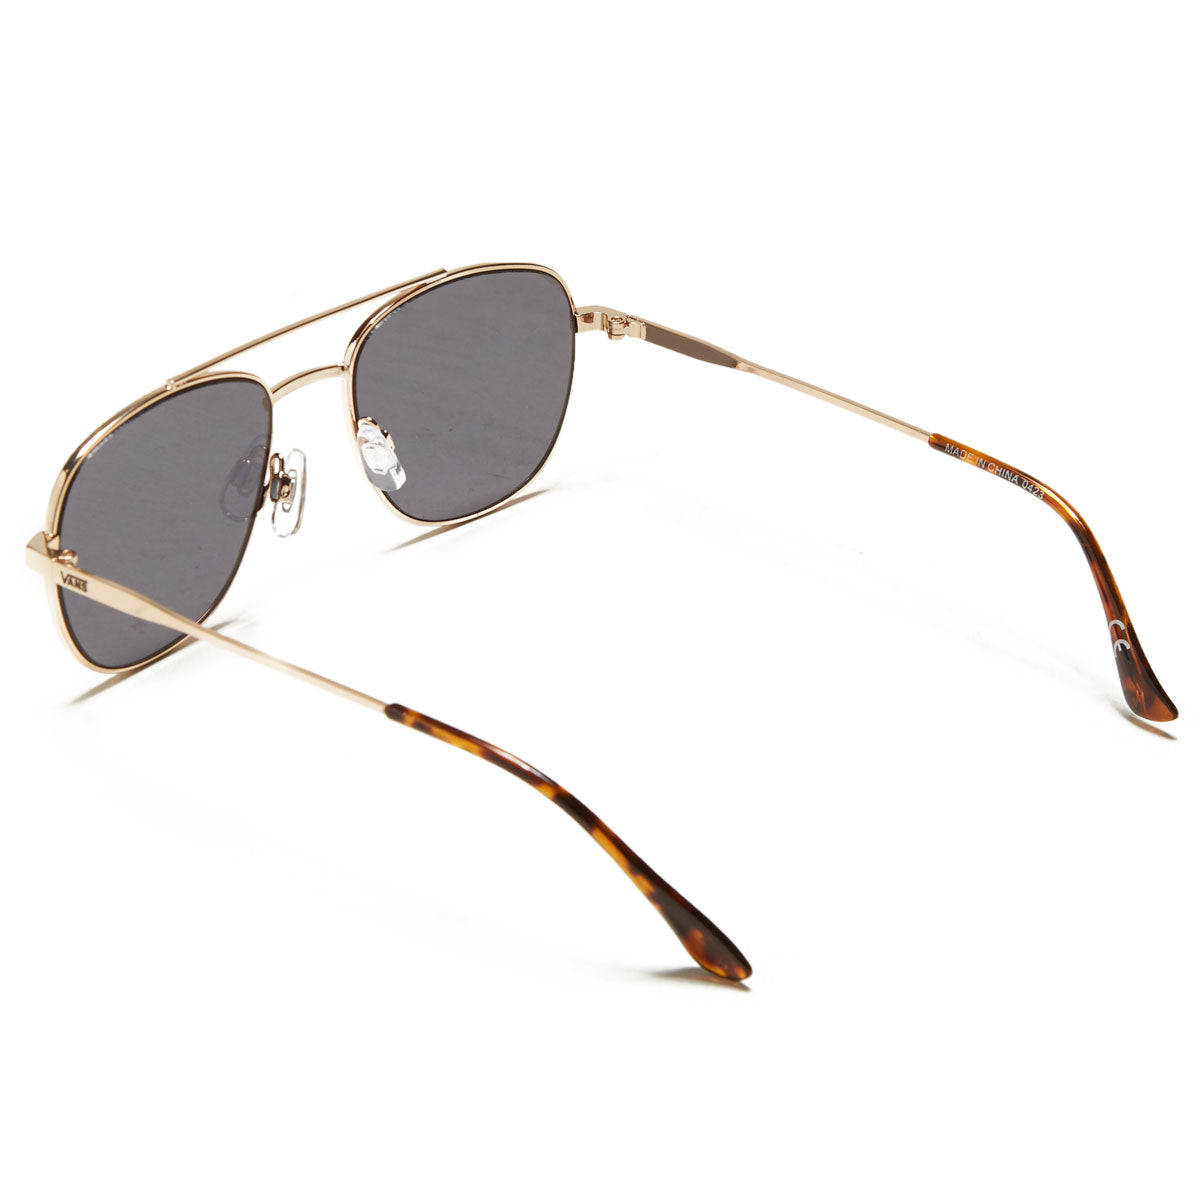 Vans Womens Chipper Sunglasses - Gold image 2